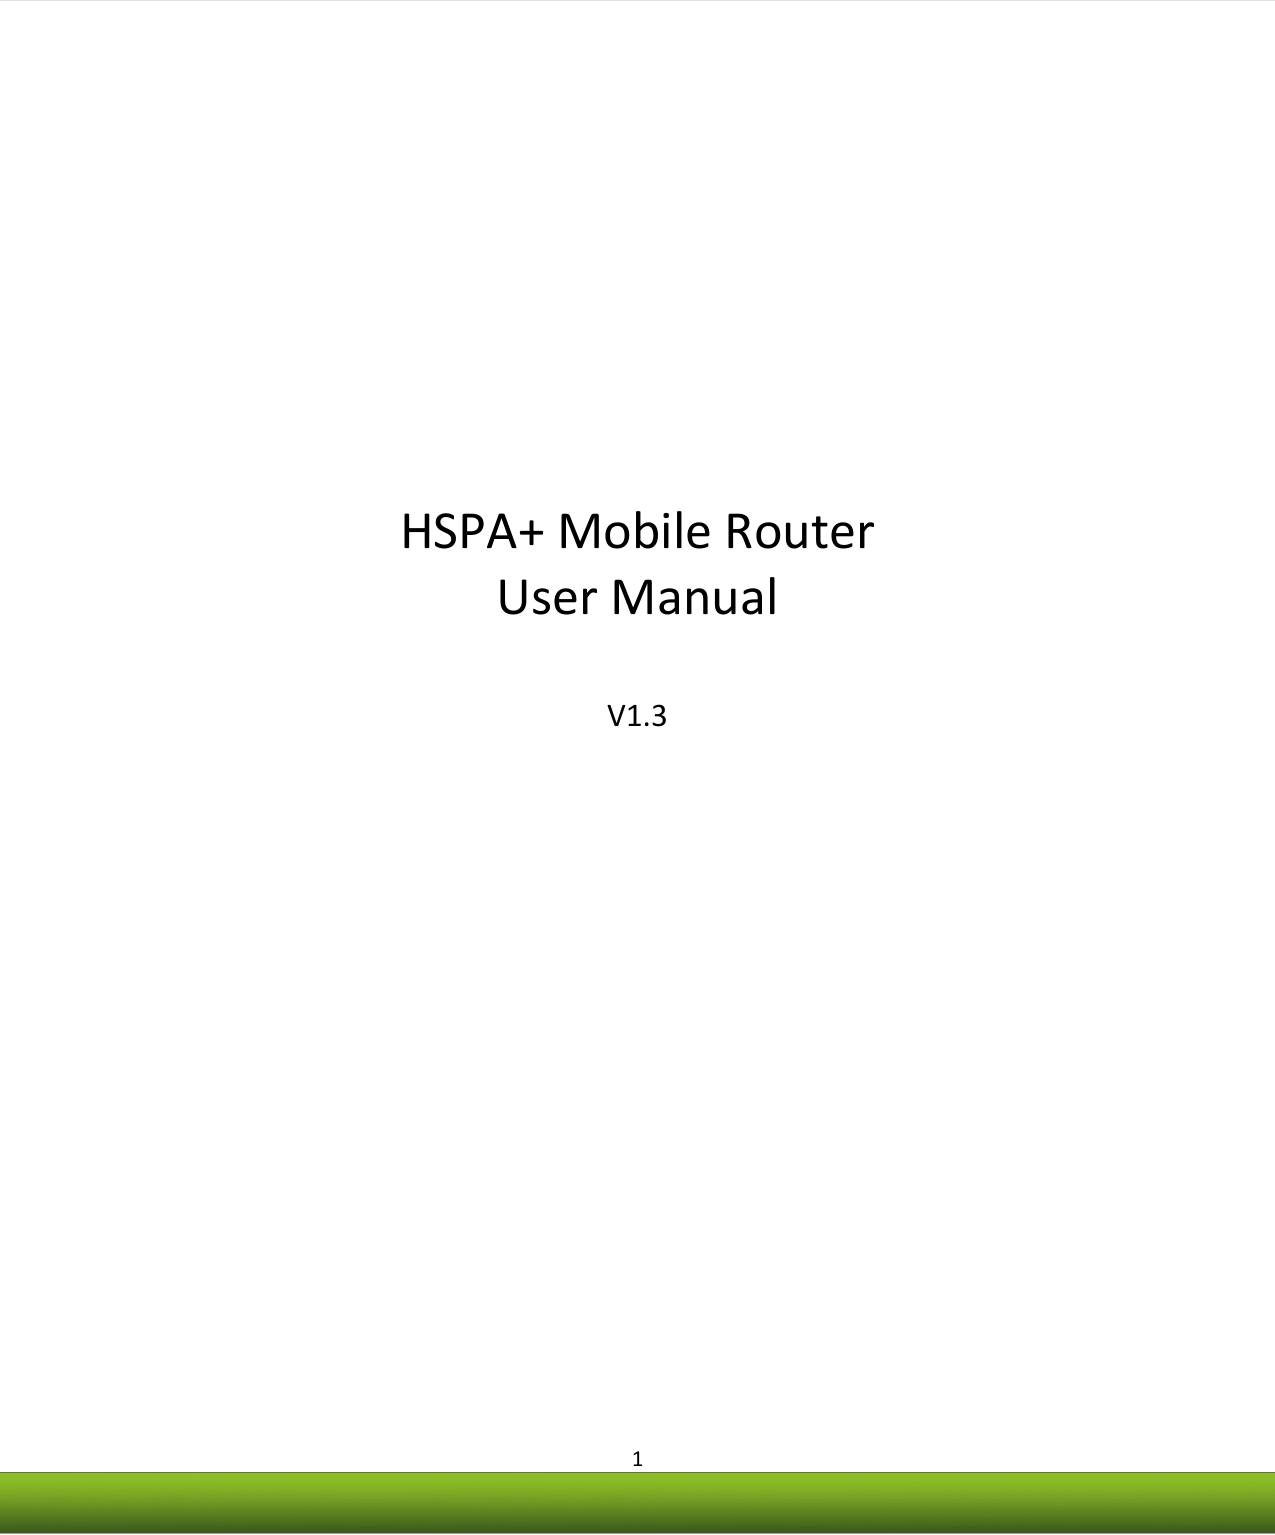    1          HSPA+ Mobile Router User Manual  V1.3 